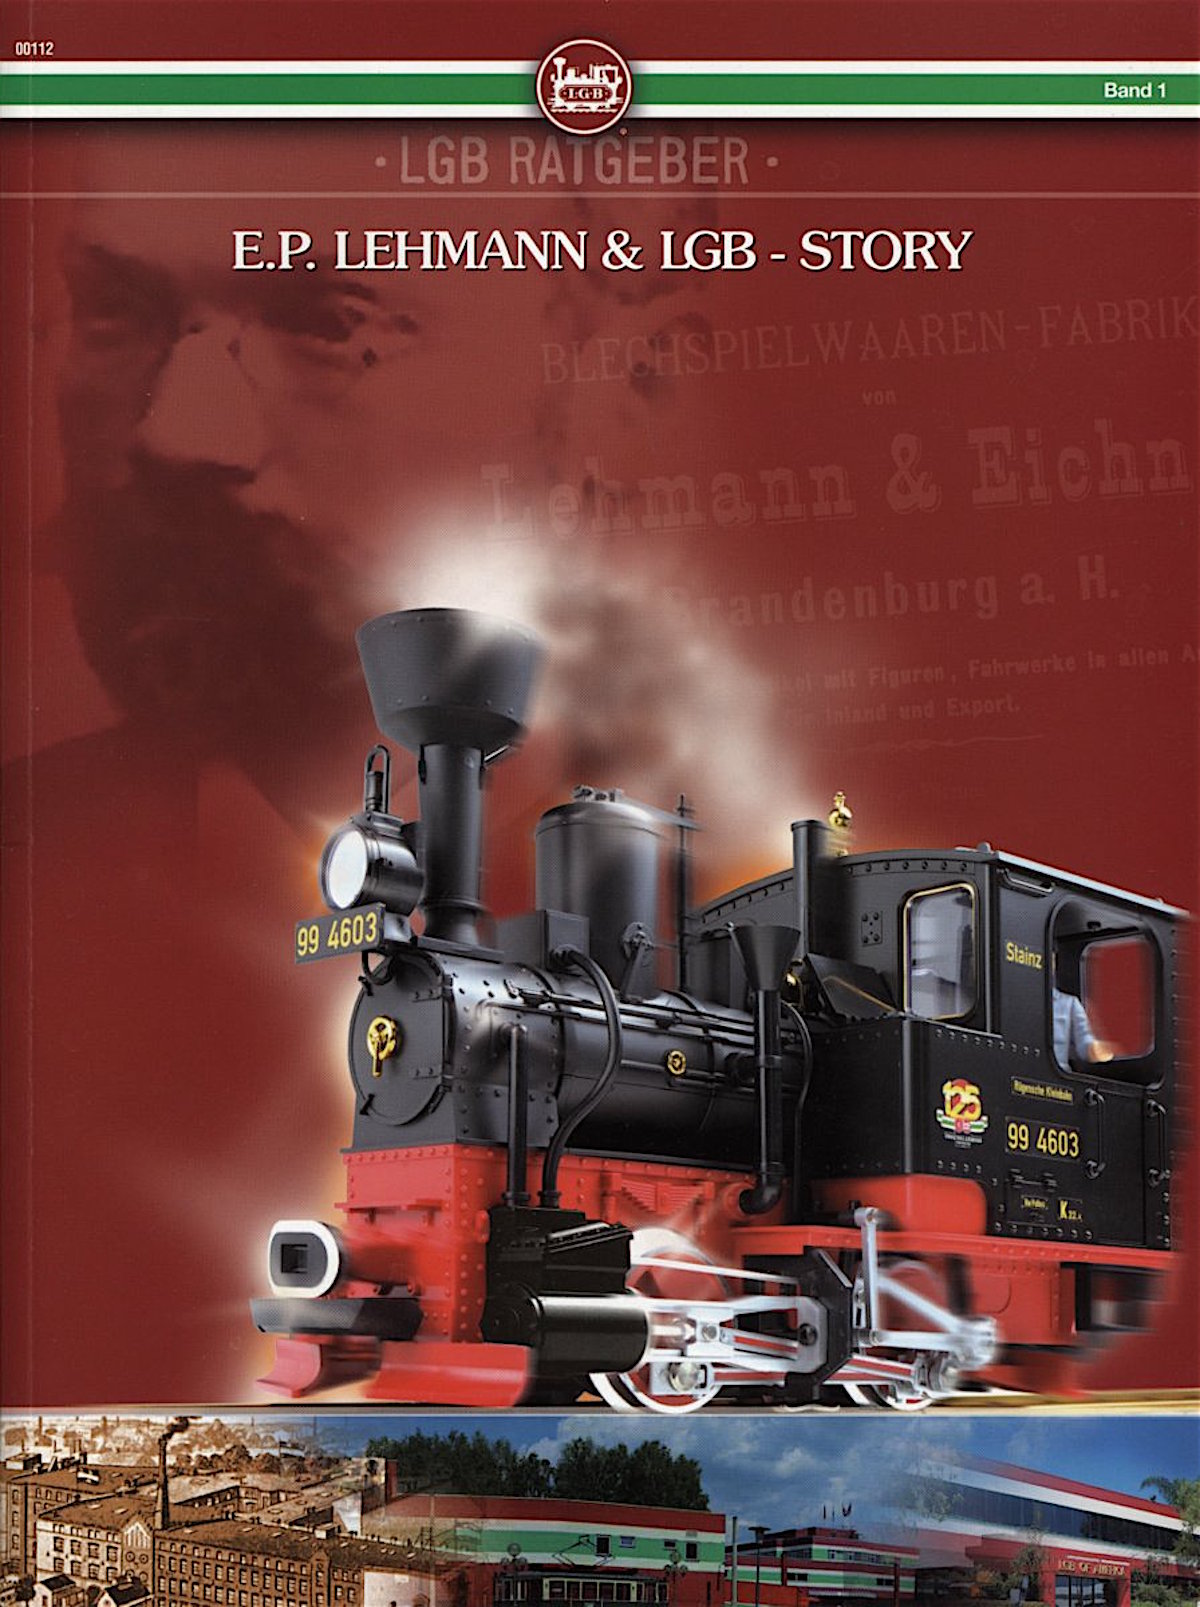 E. P. Lehmann Geschichte (History) - 2006 E.P.Lehmann & LGB - Story